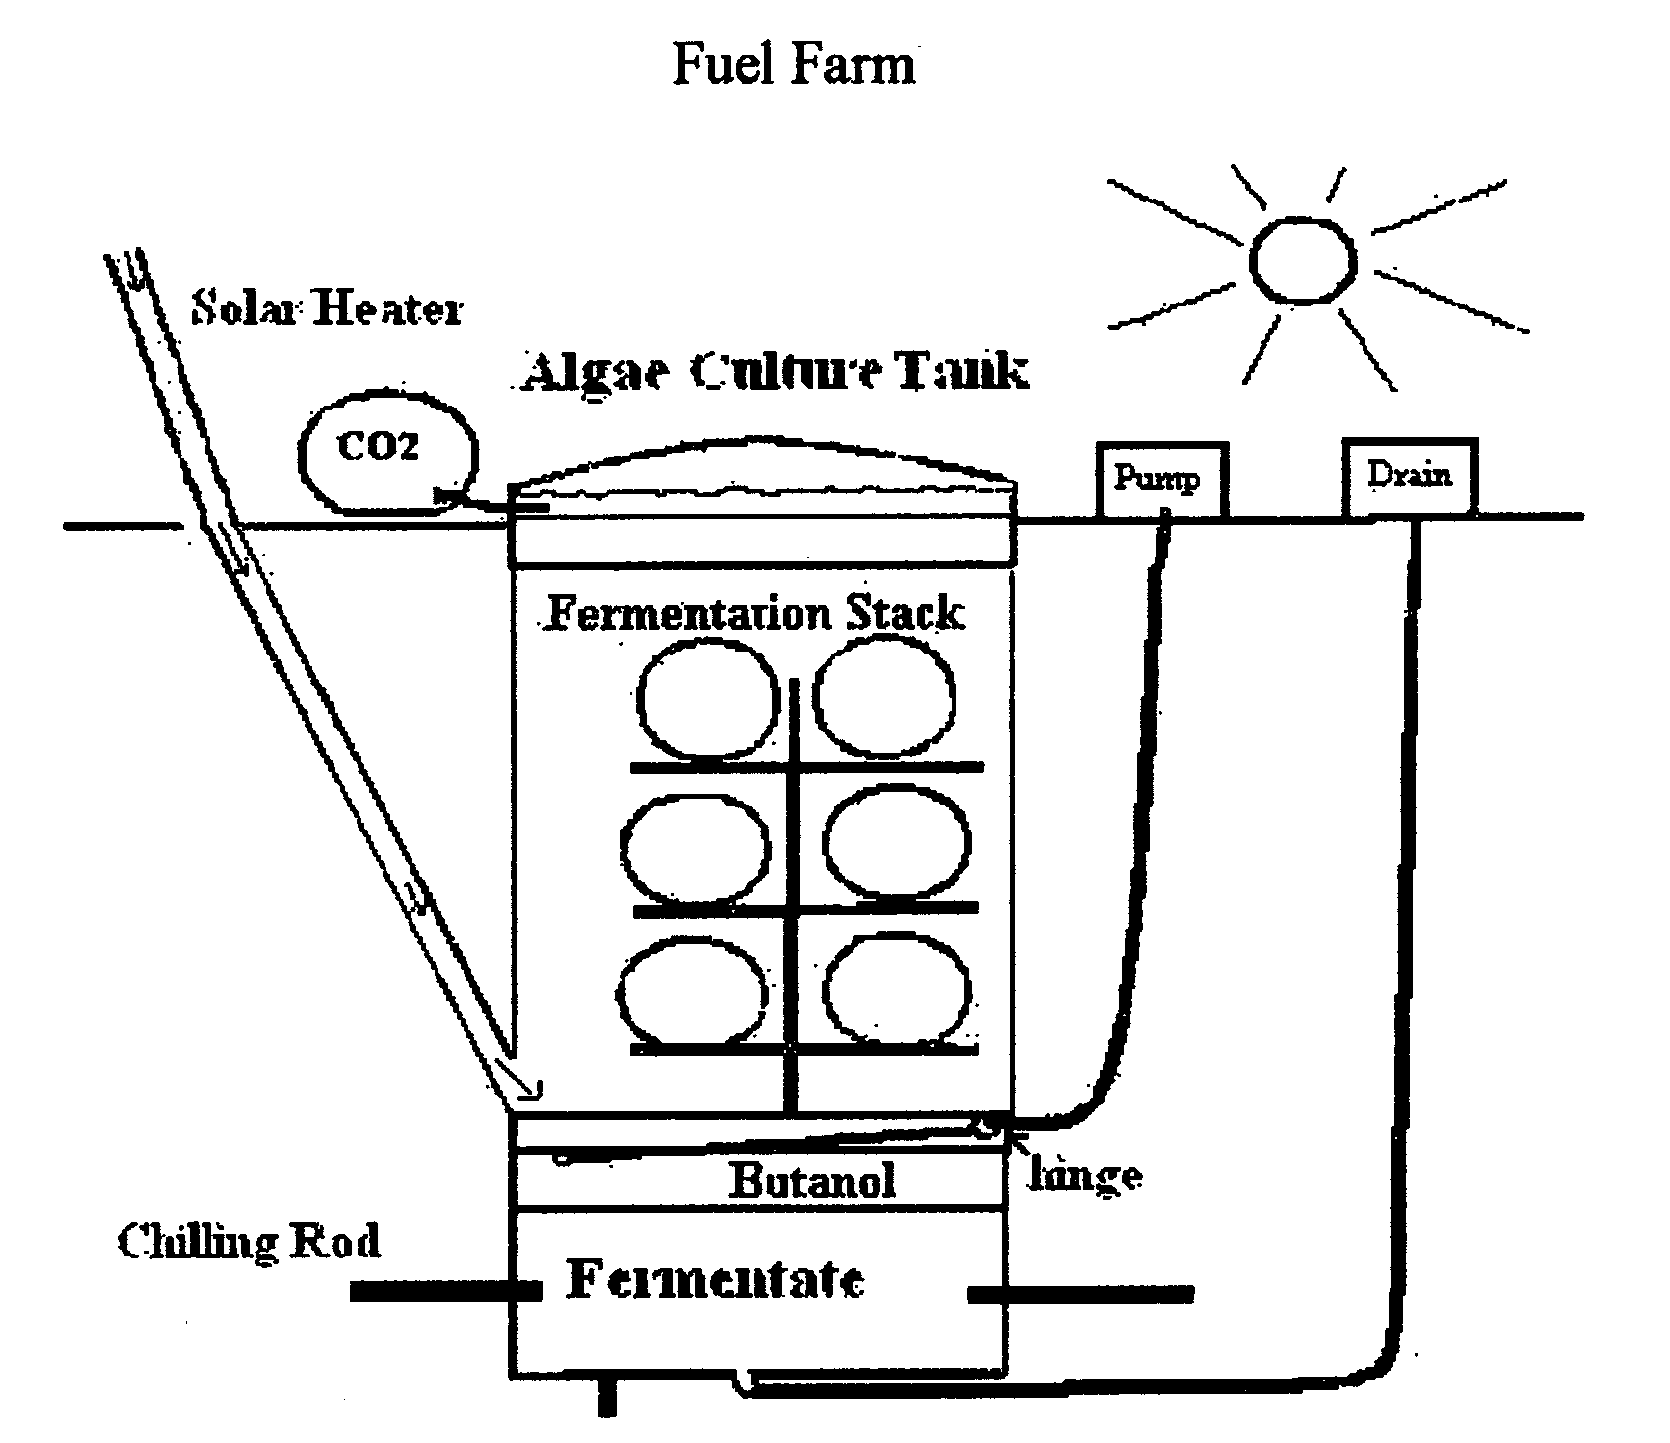 Fuel farm